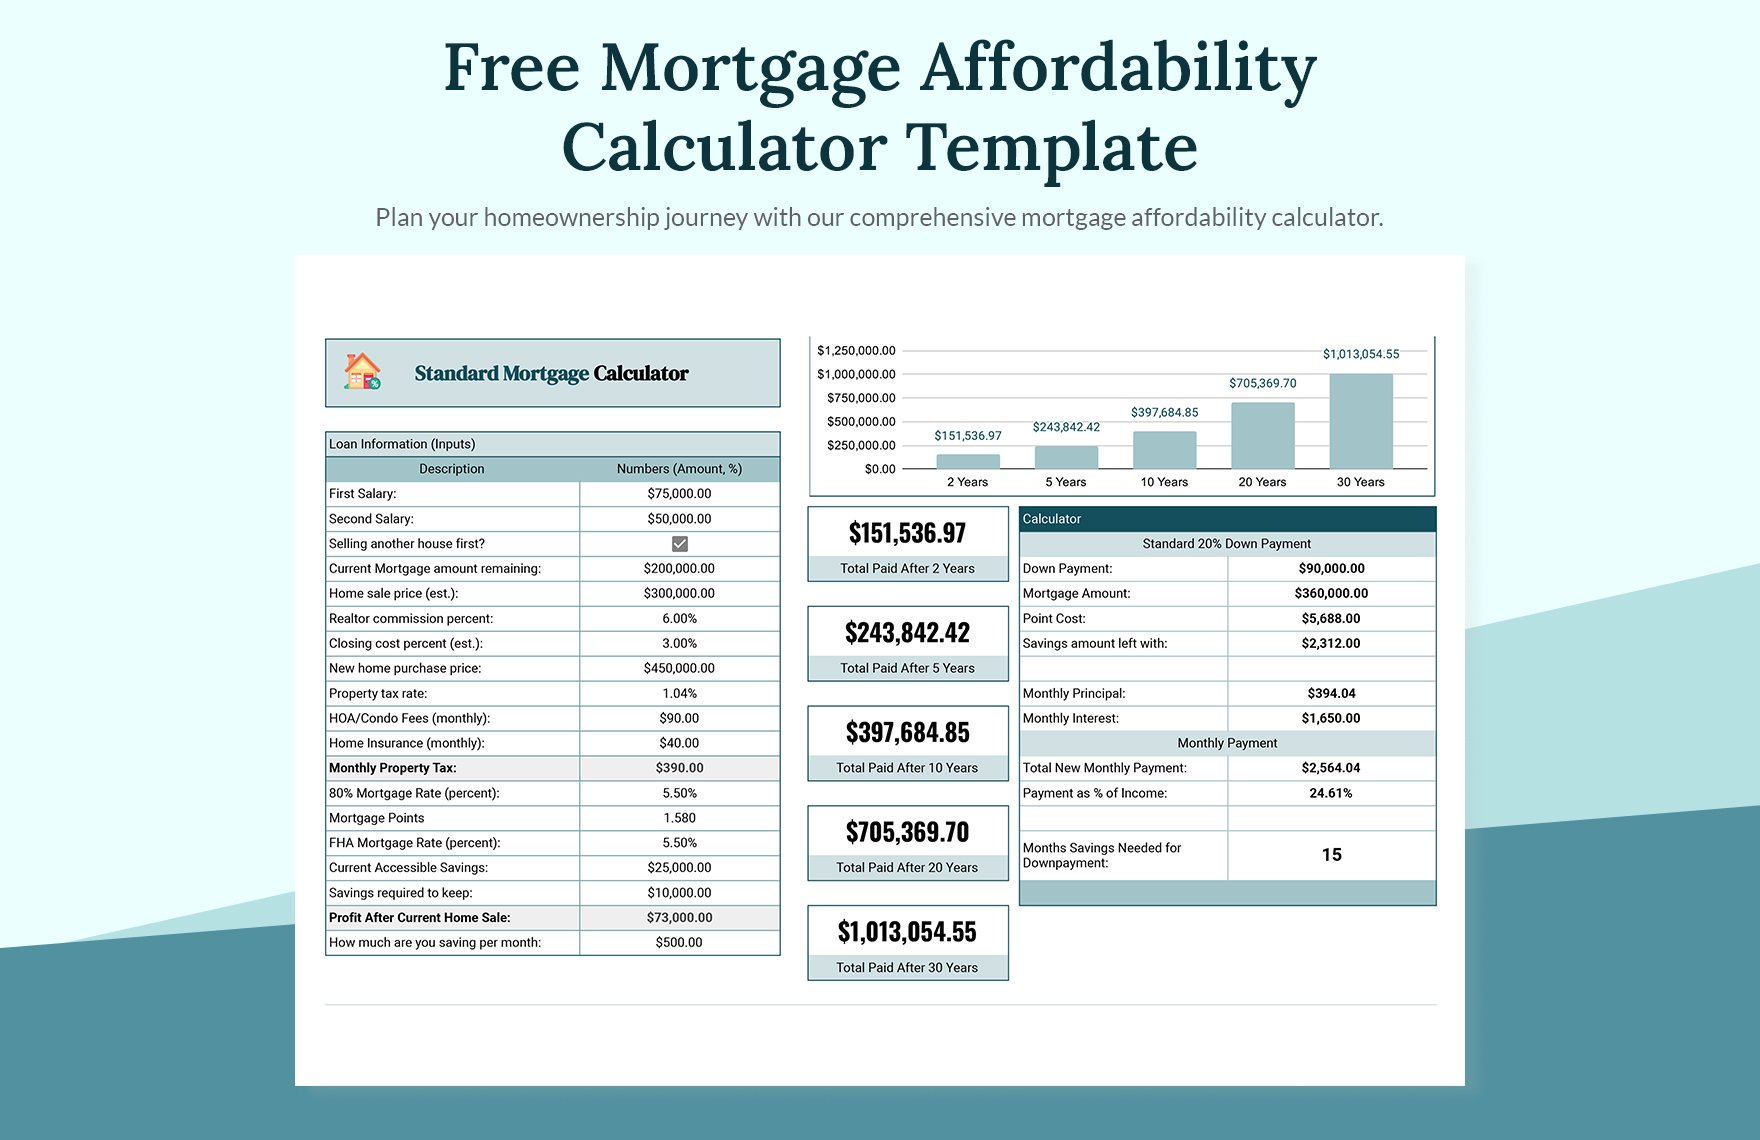 Free Mortgage Affordability Calculator Template